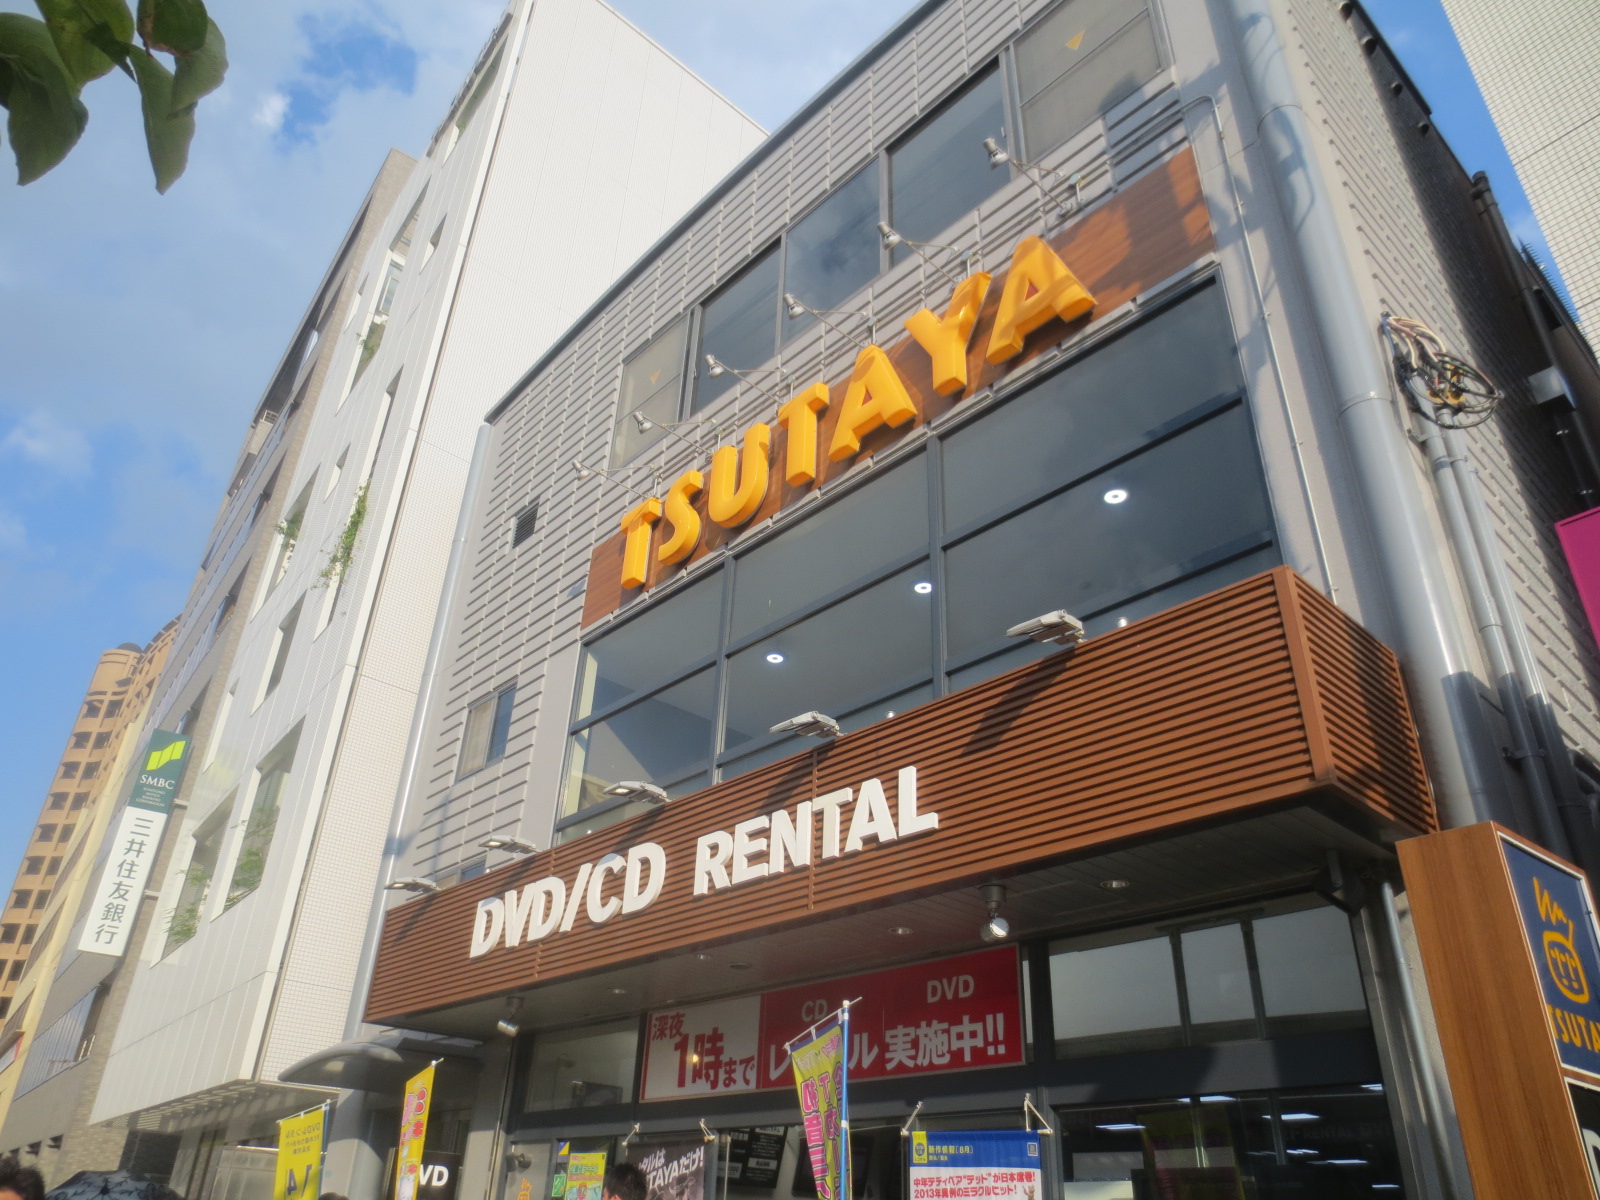 Rental video. TSUTAYA Okamoto shop 441m up (video rental)